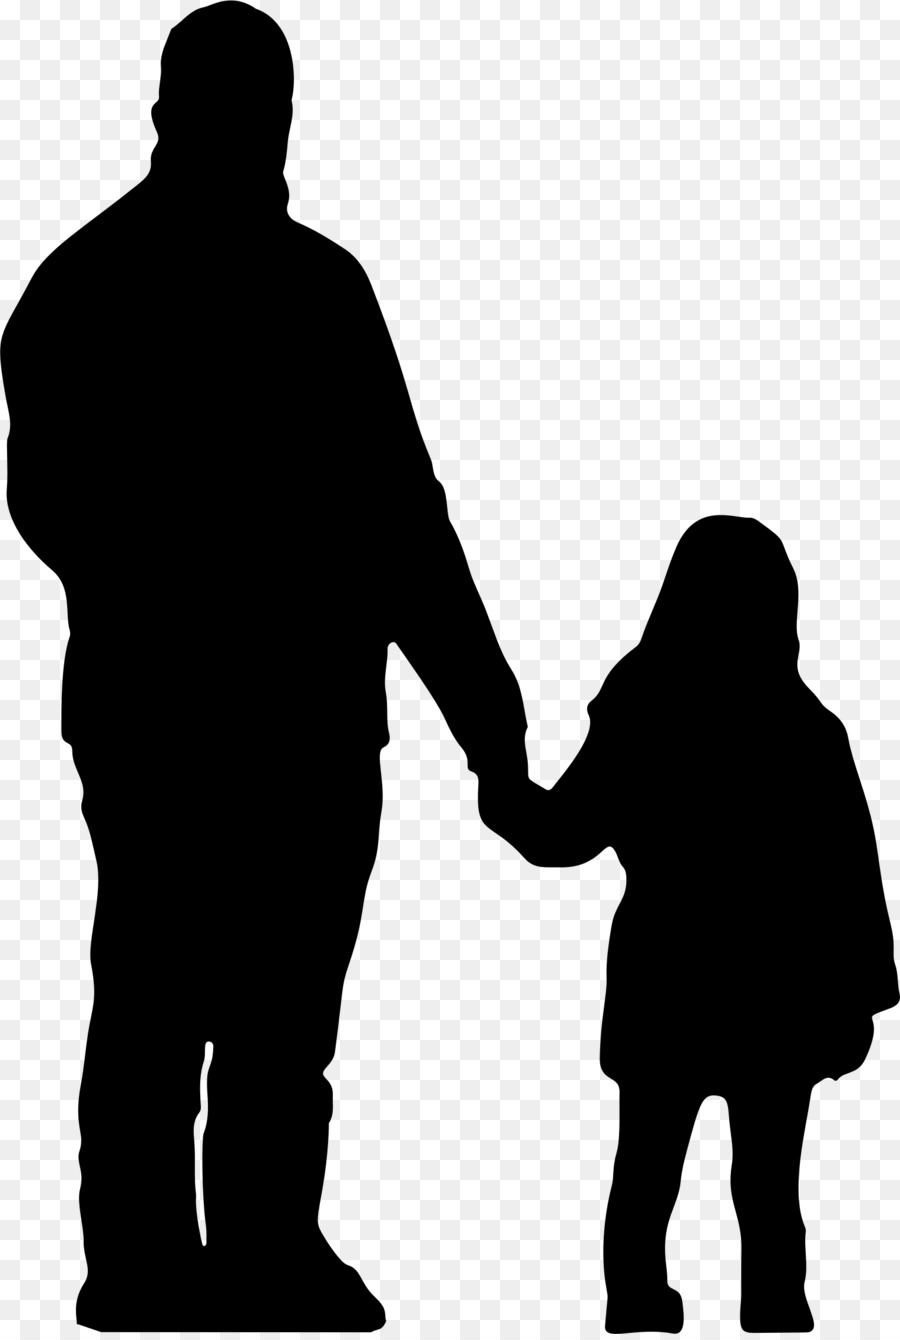 Father Daughter Silhouette Parent Clip art - father png download - 1528*2265 - Free Transparent Father png Download.